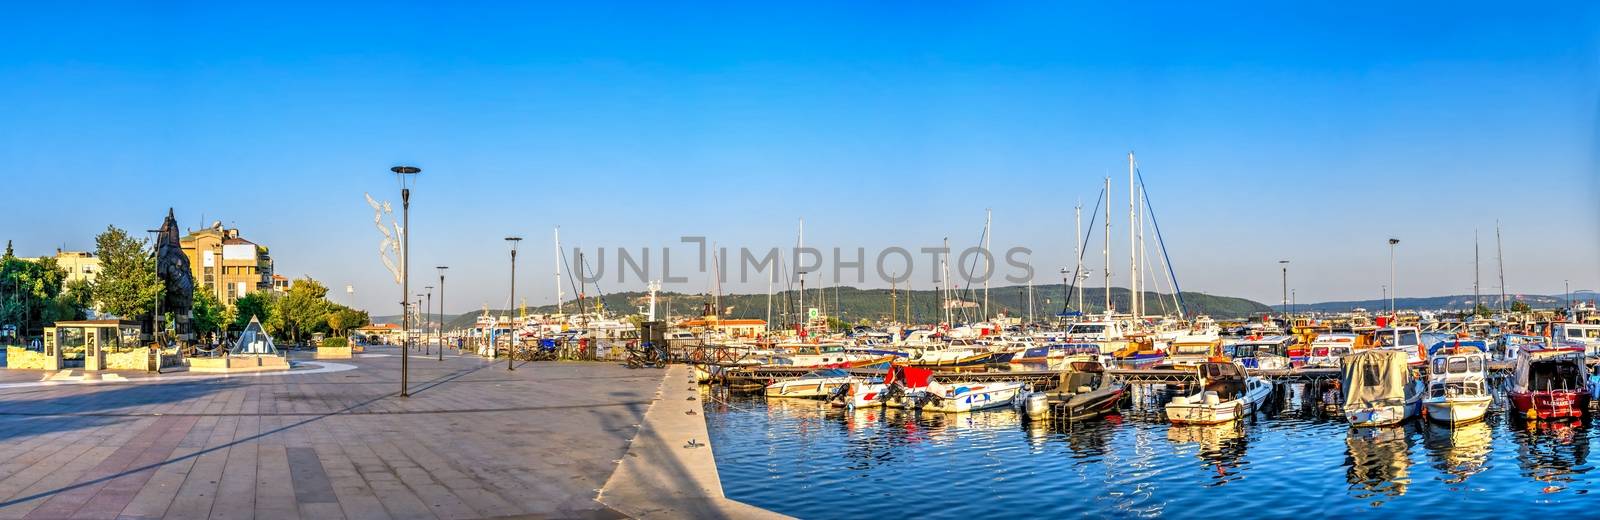 Canakkale marina in Turkey by Multipedia